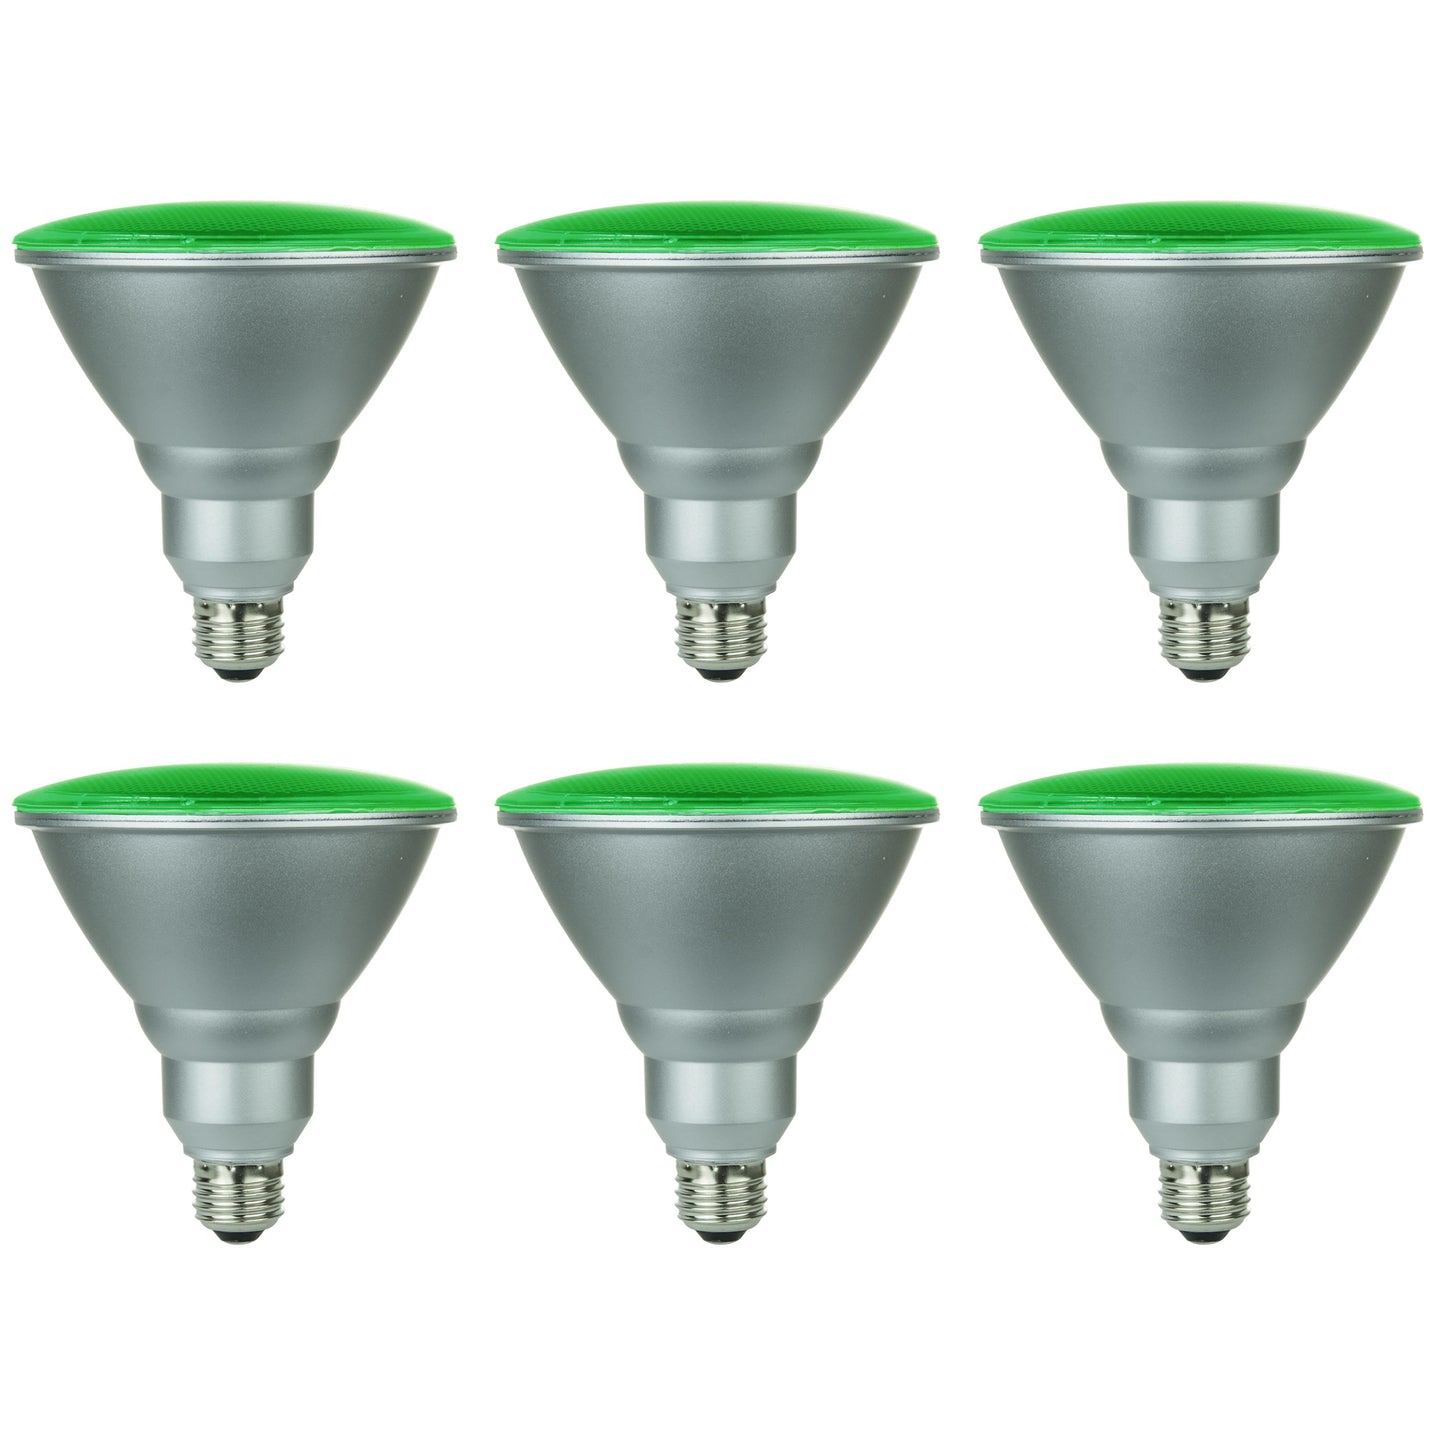 Sunlite LED PAR38 Colored Reflector 6W Light Bulb Medium (E26) Base, Green